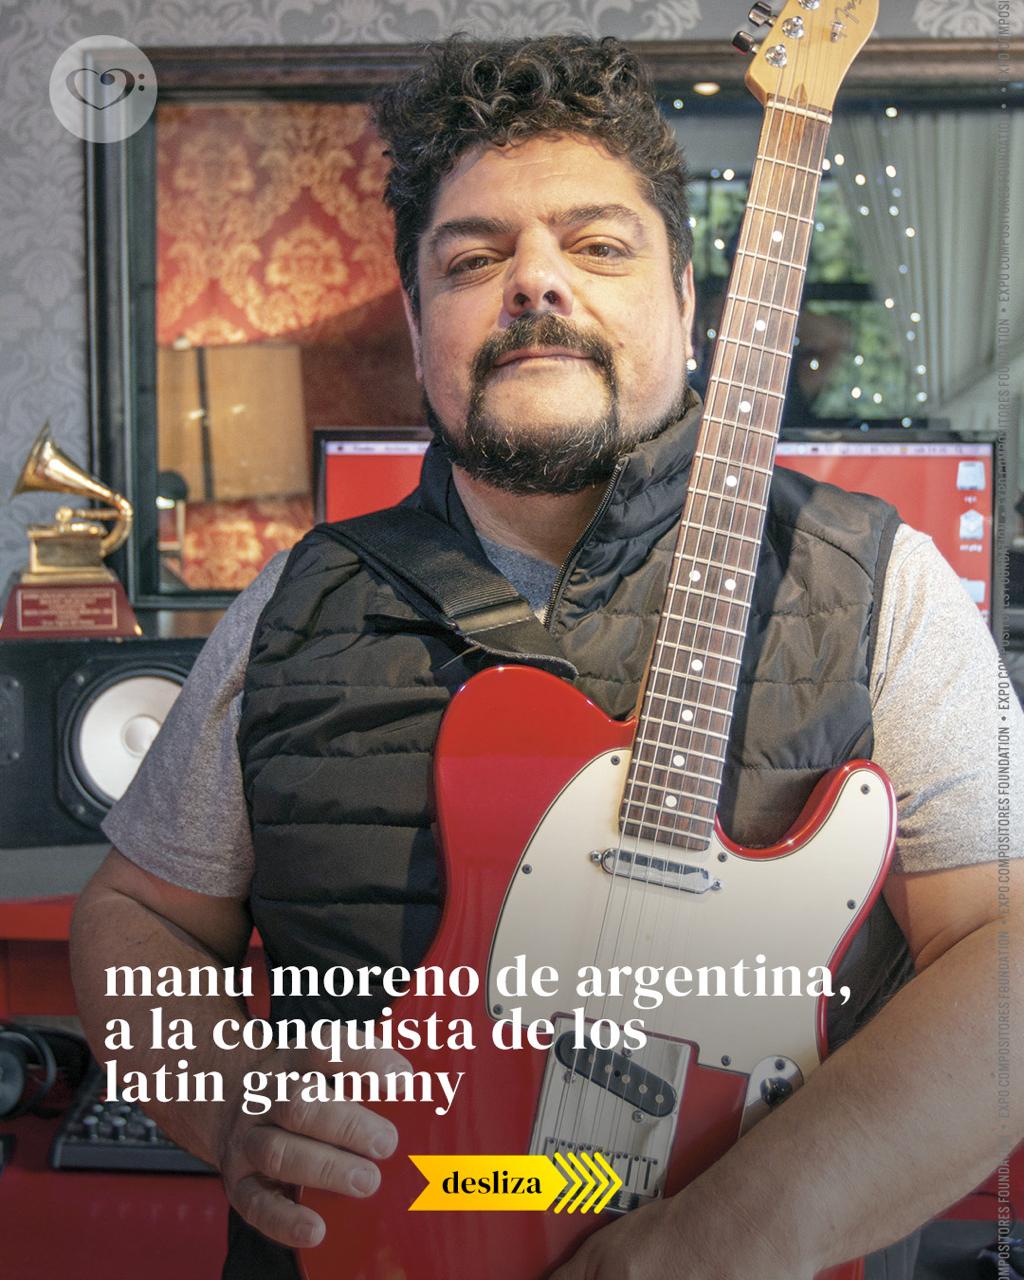 Manu Moreno de Argentina a la conquista de los Latin Grammy